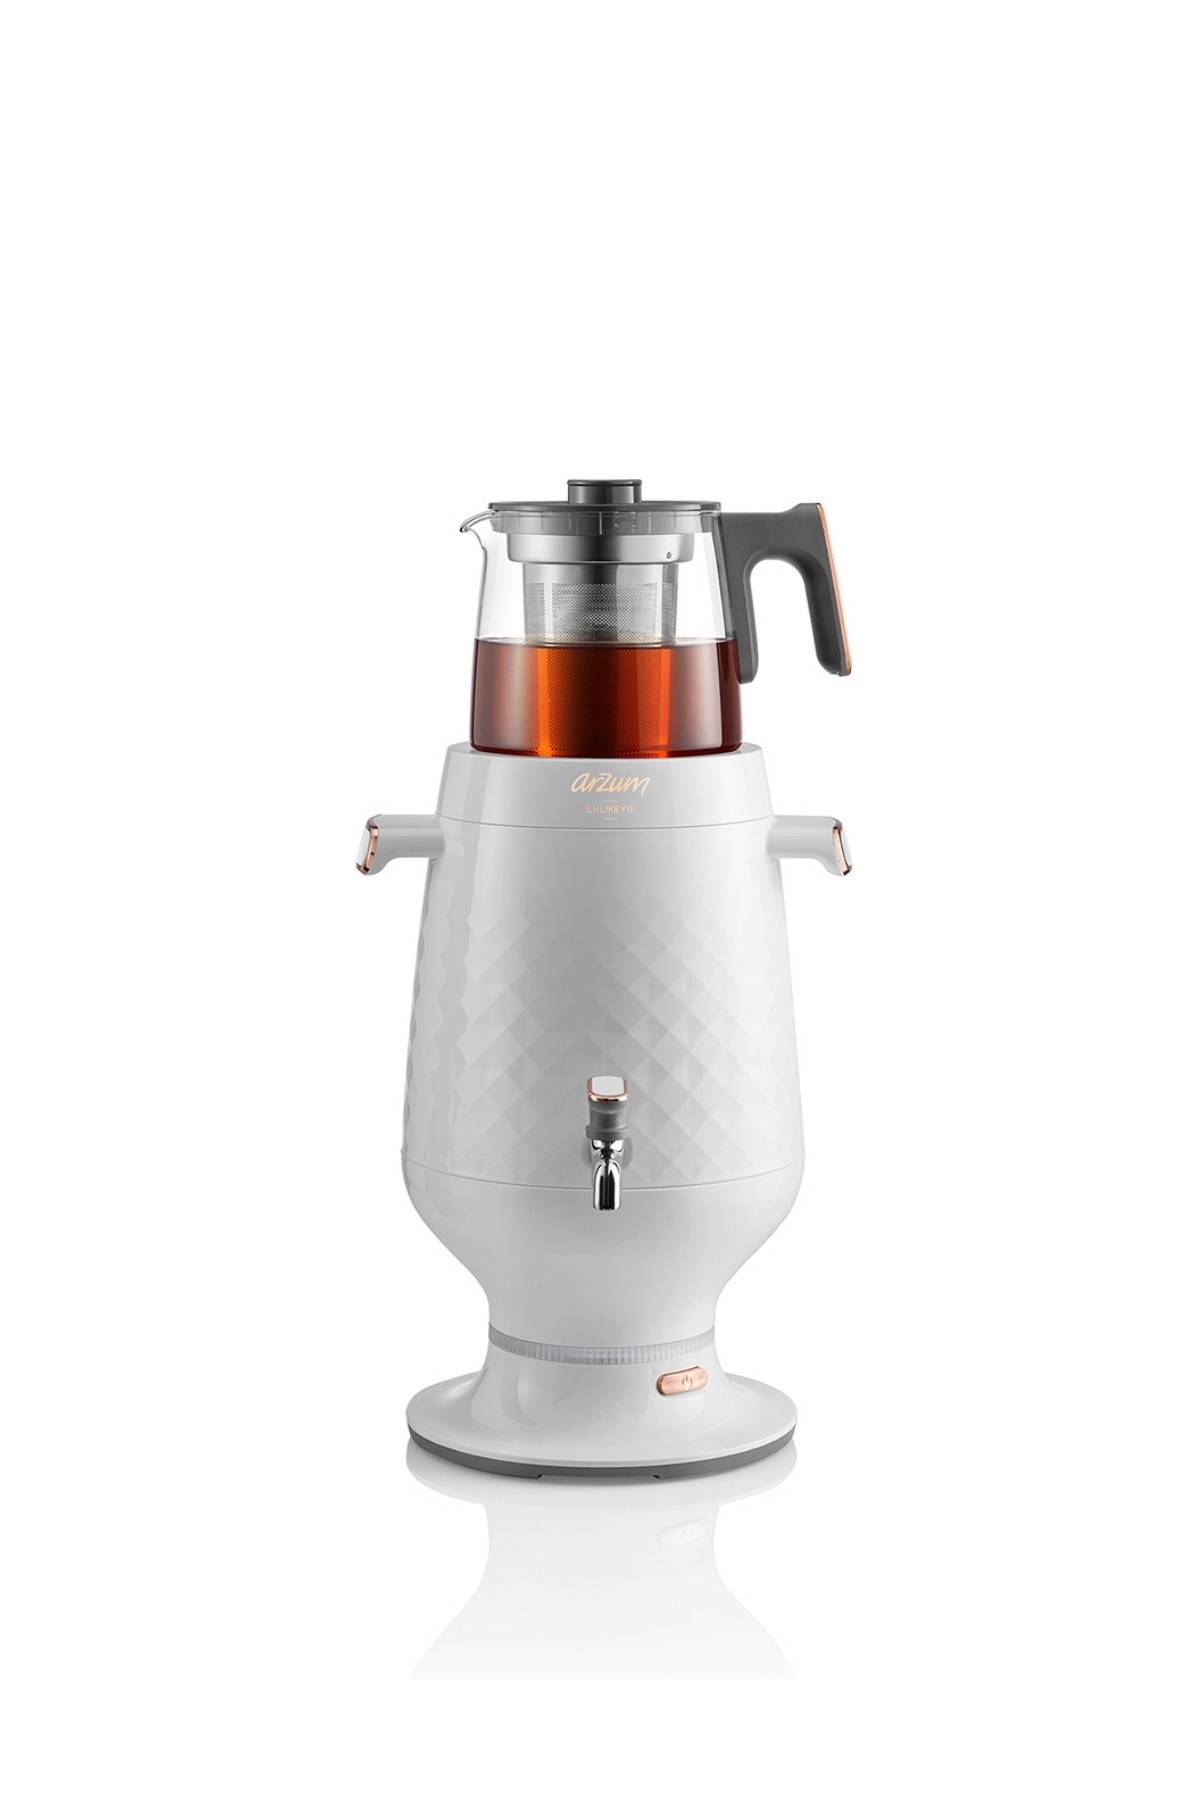 Turkish Electric Teapot Tea Maker Machine Hot Water Boiler Semaver SAMOVER  in Home, Furniture DIY, Appliances, Coffee, Tea Espr…